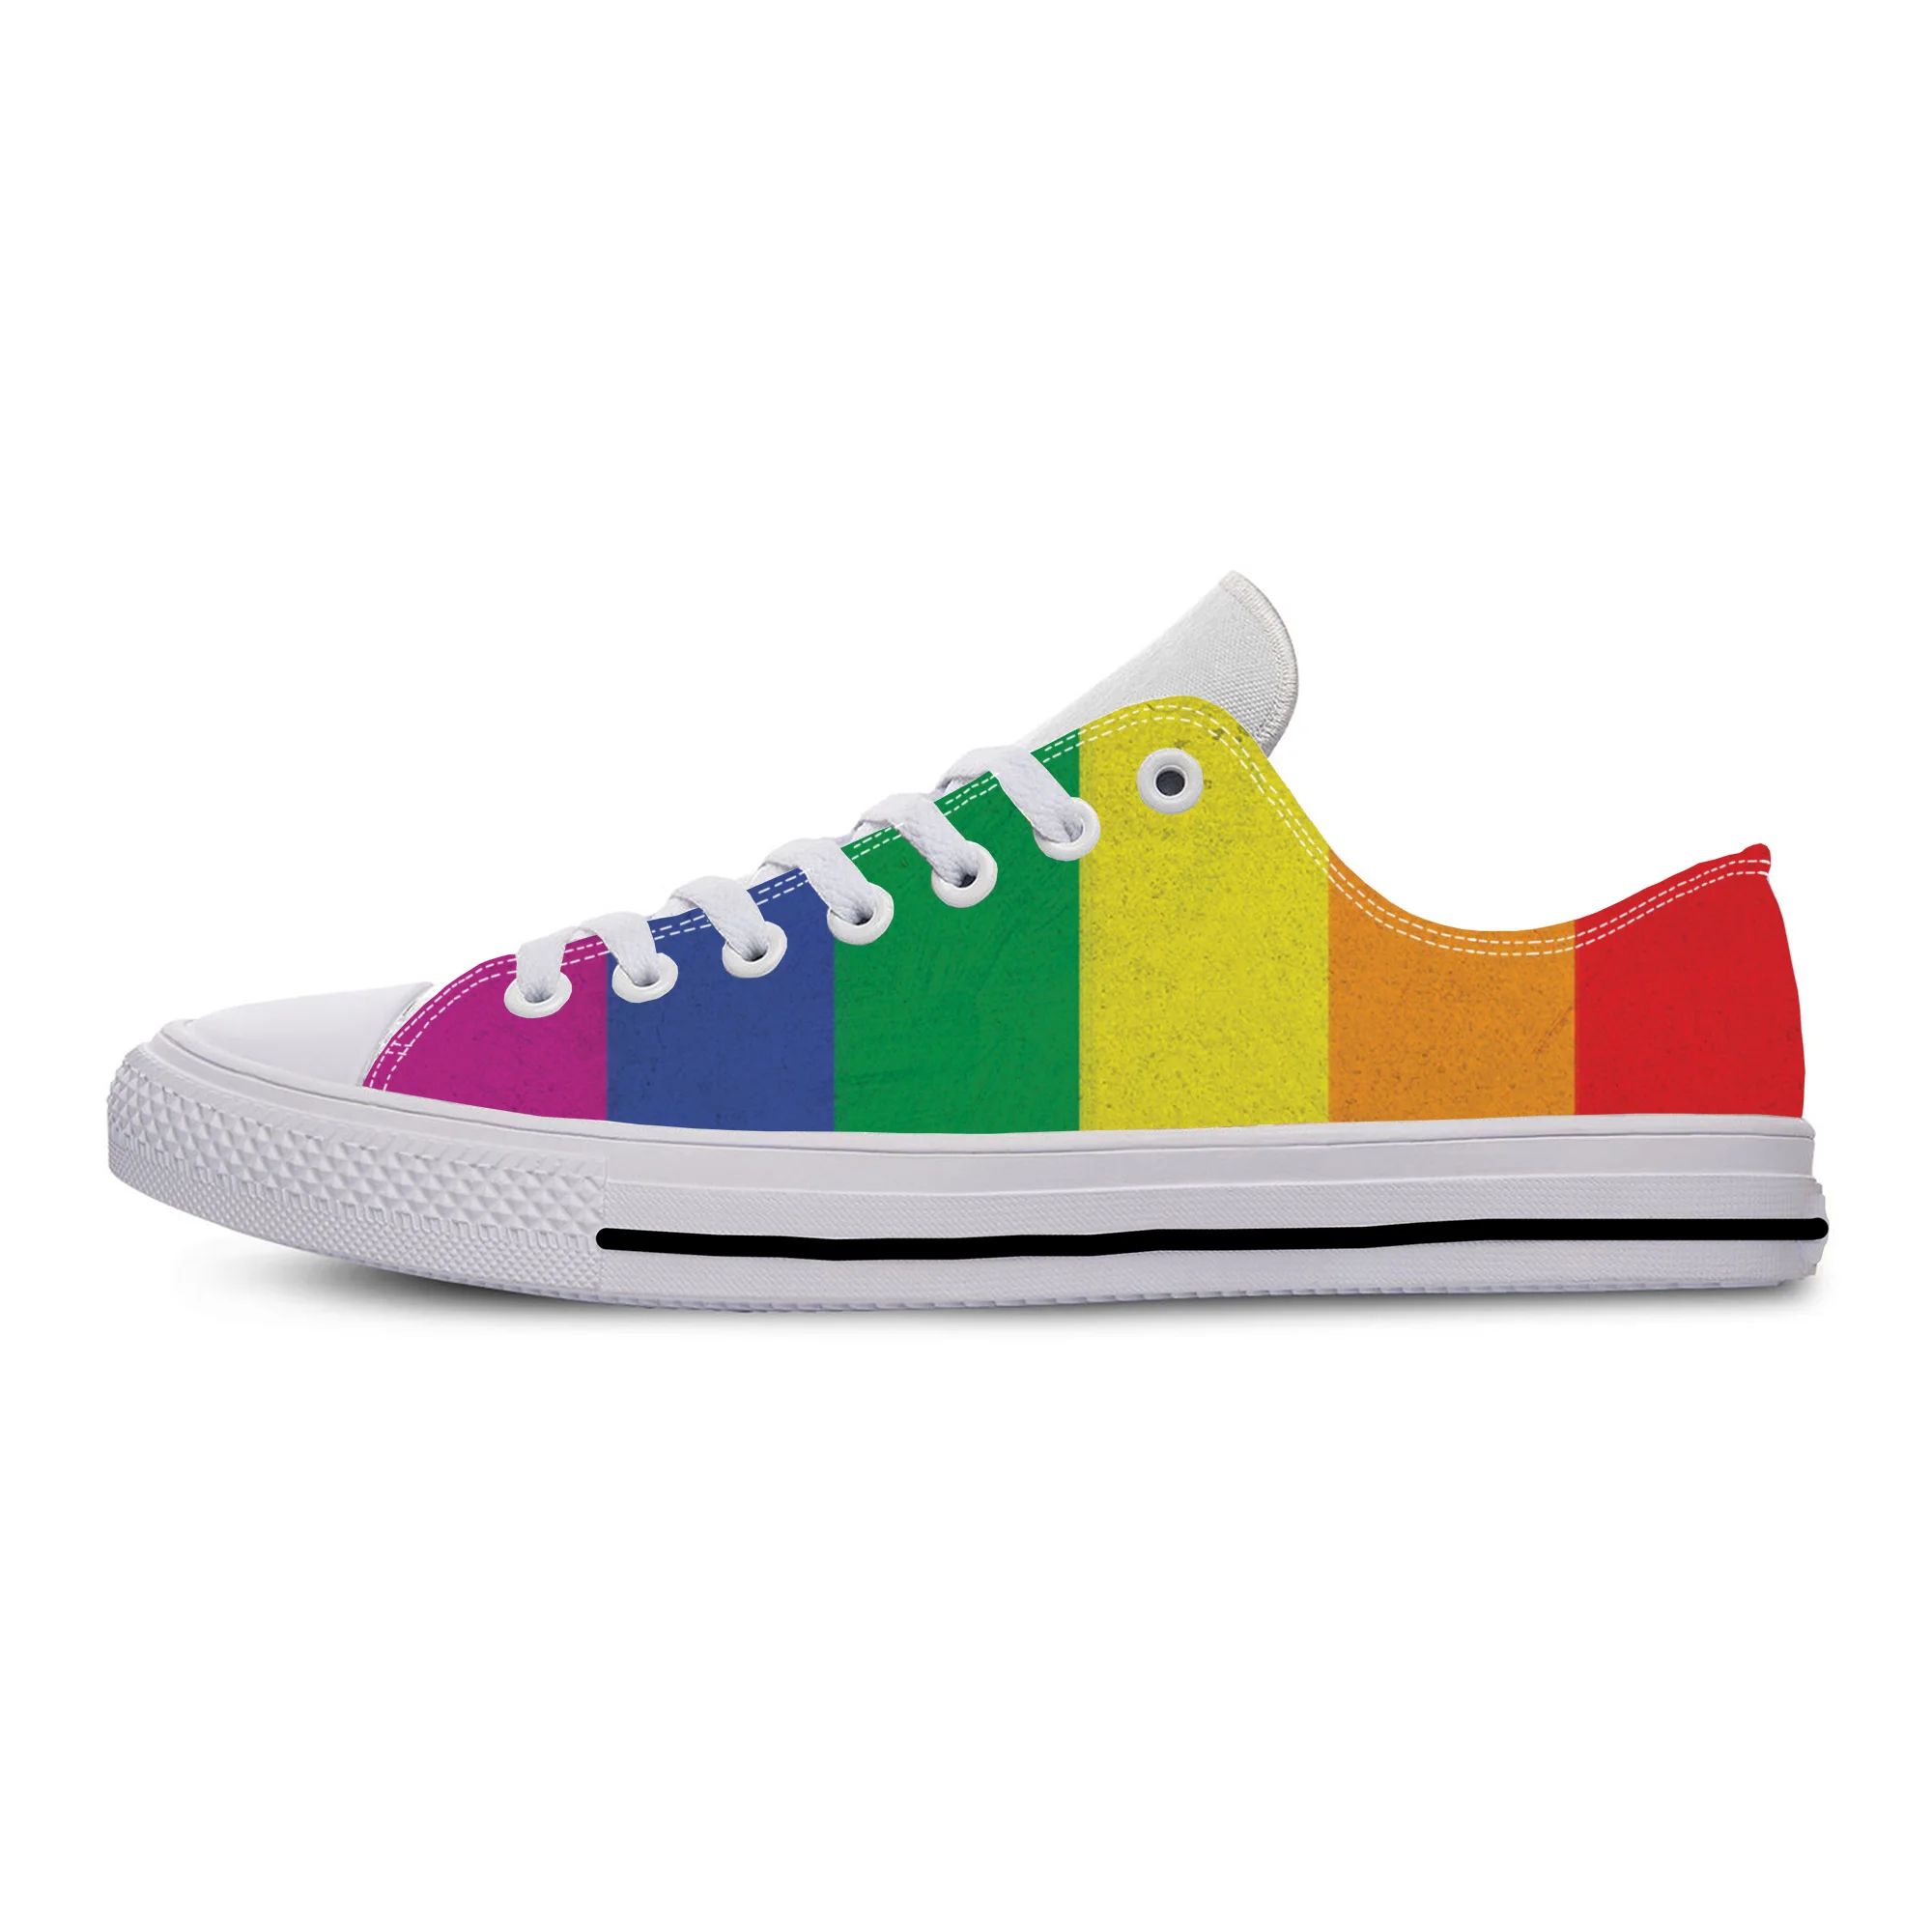 Colore: Rainbow LGBT8Shoe Dimensione: 9.5